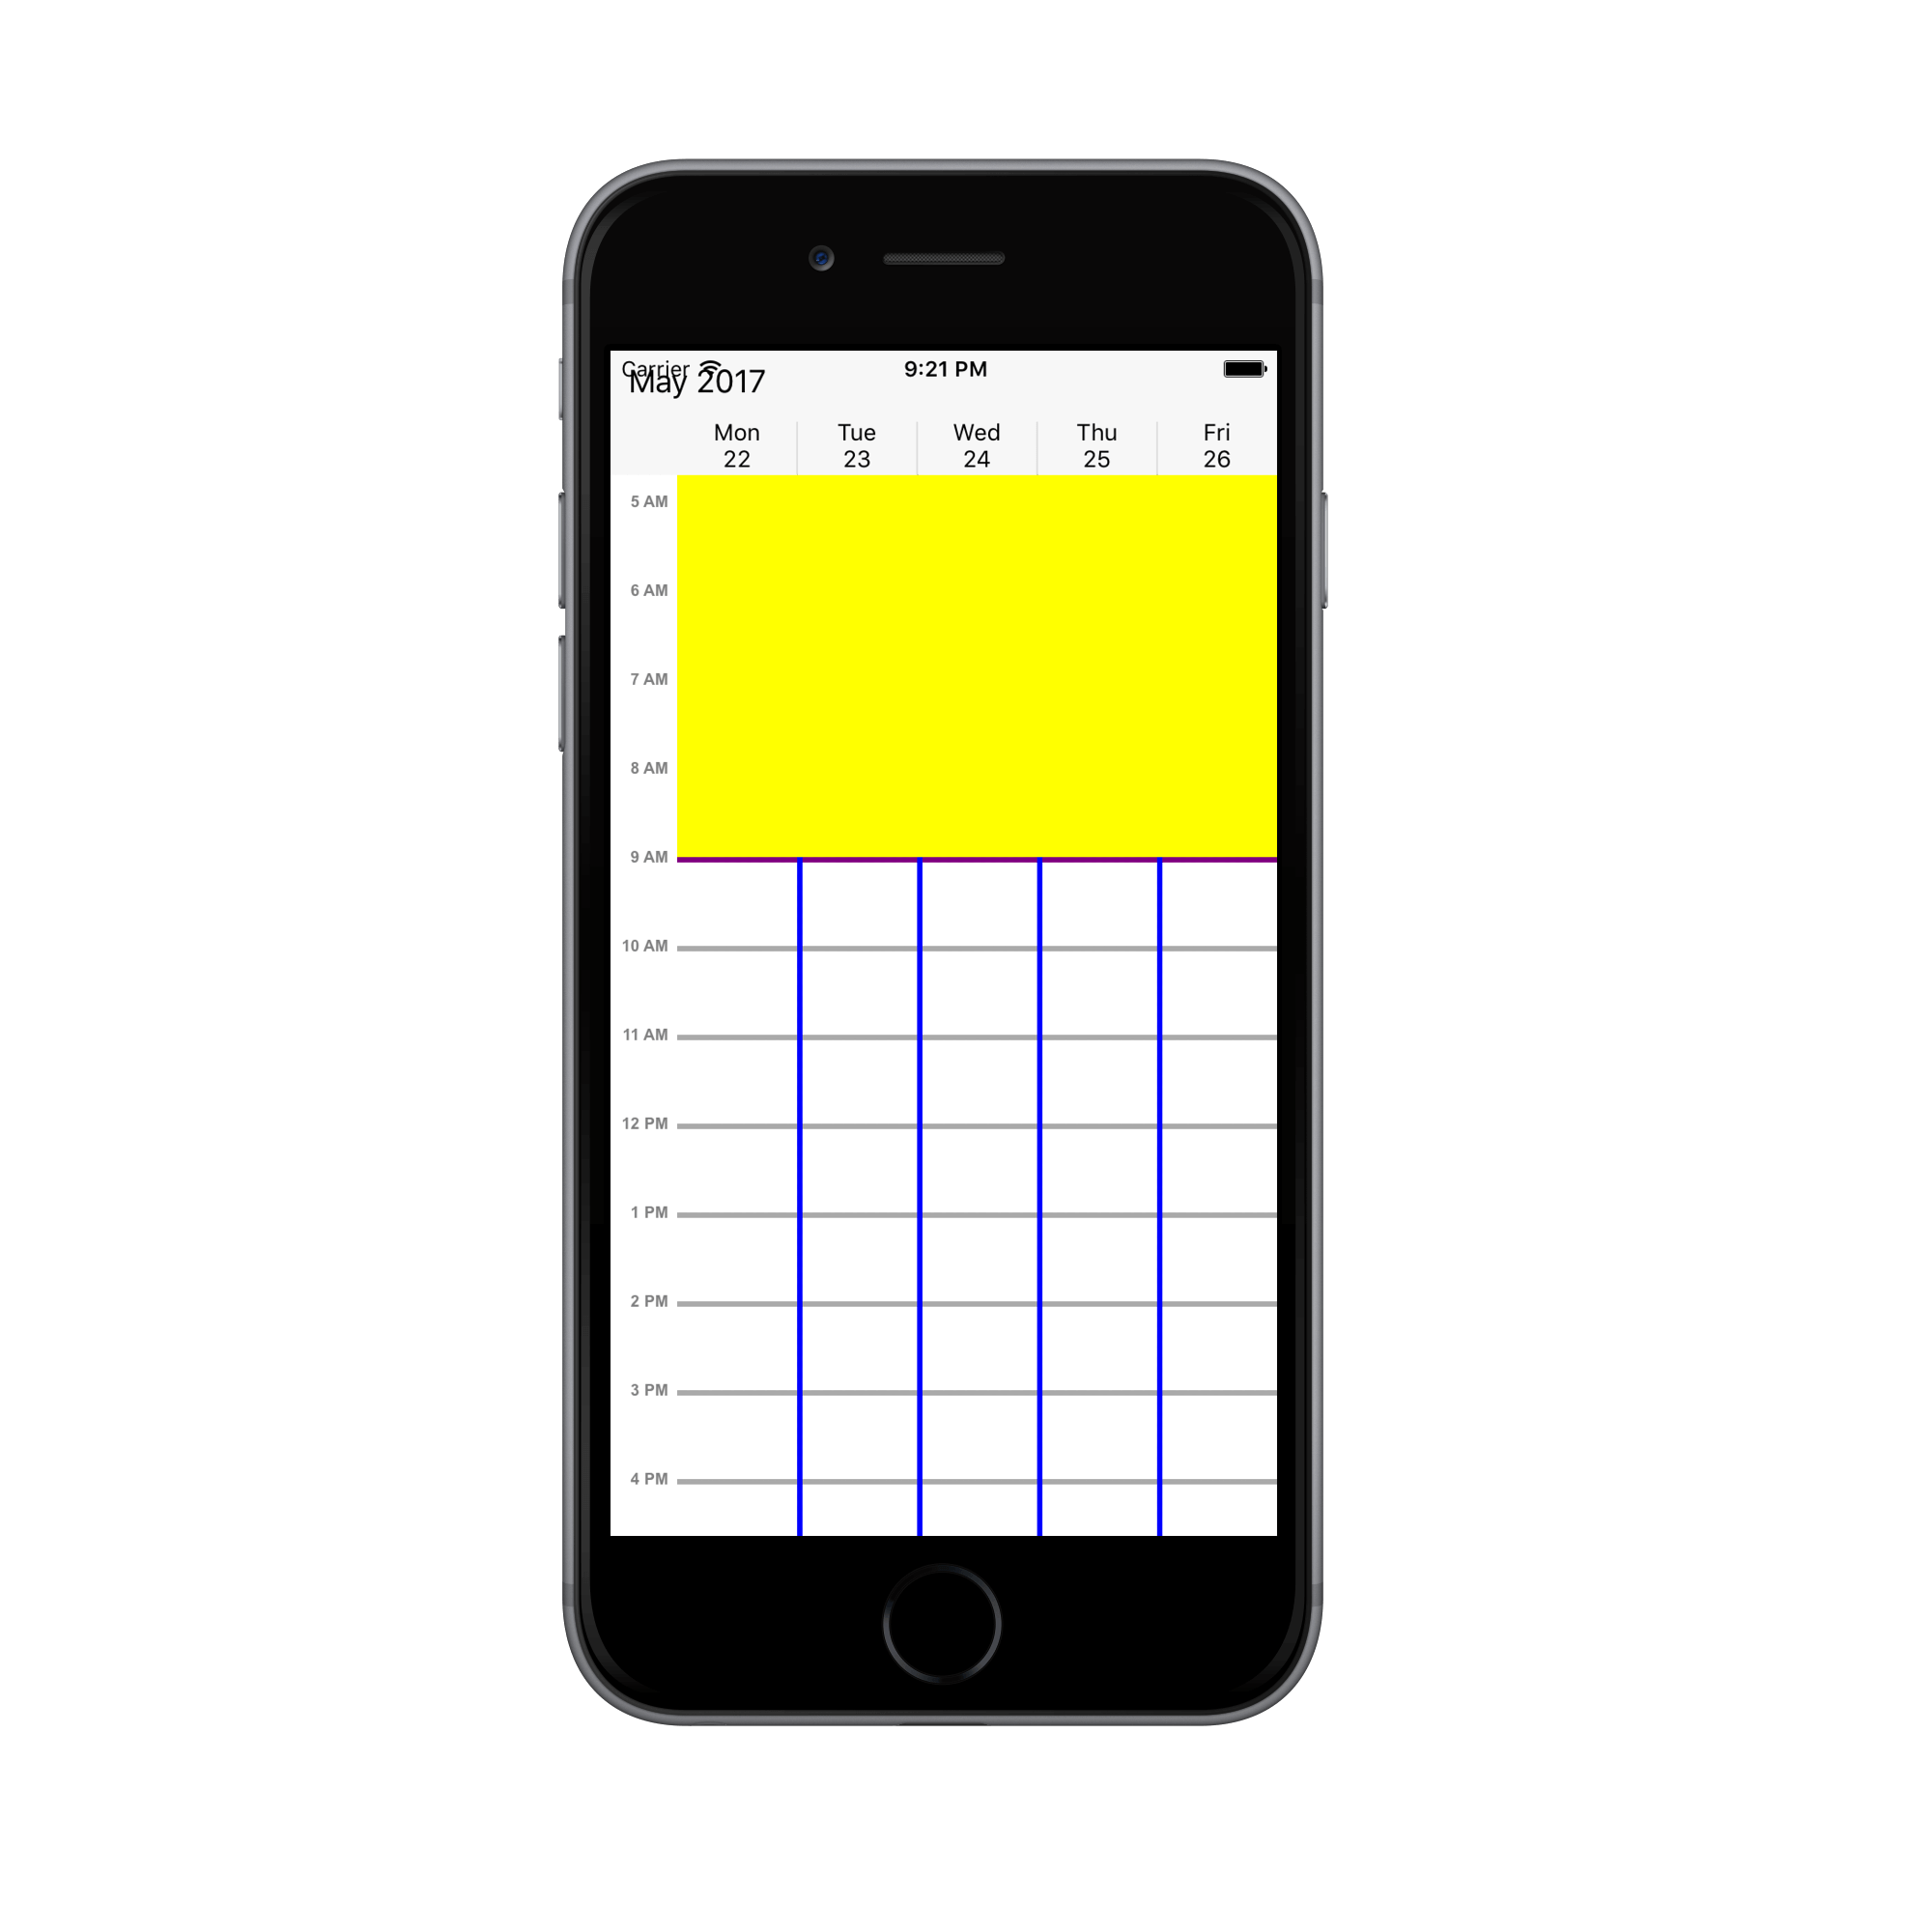 Work week view non working hours customization for schedule in Xamarin.iOS